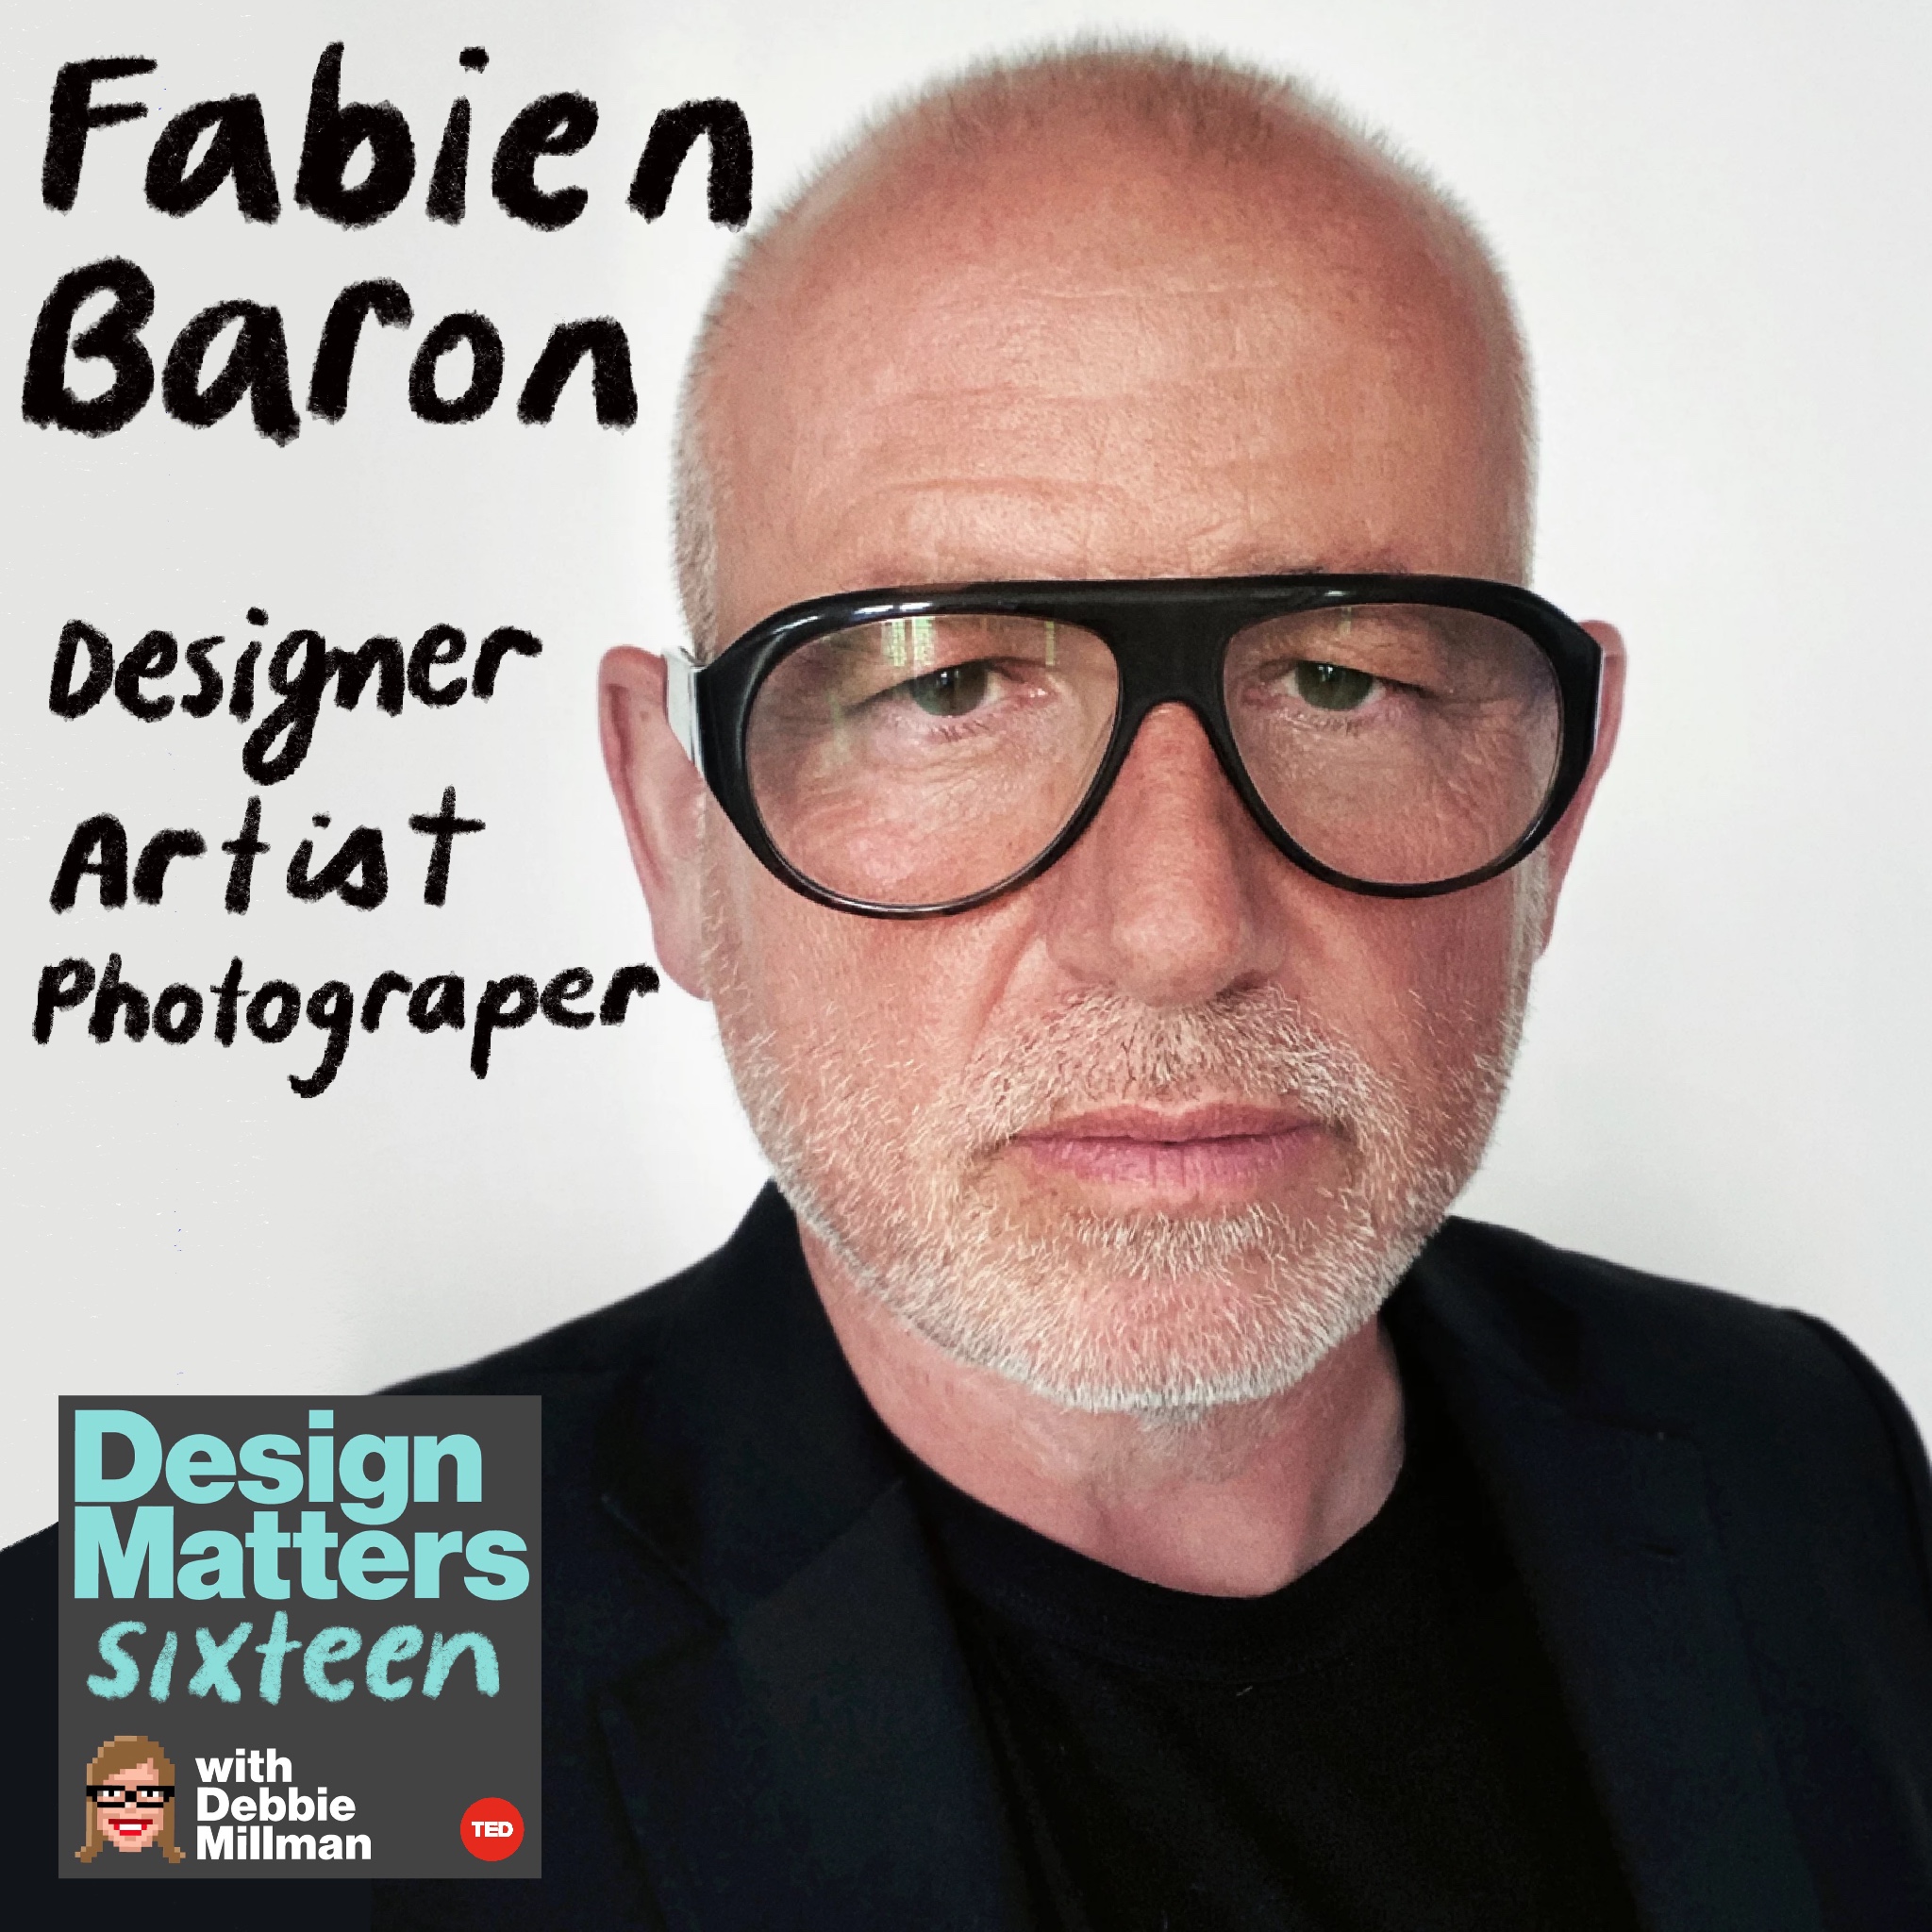 Thumbnail for "Fabien Baron".